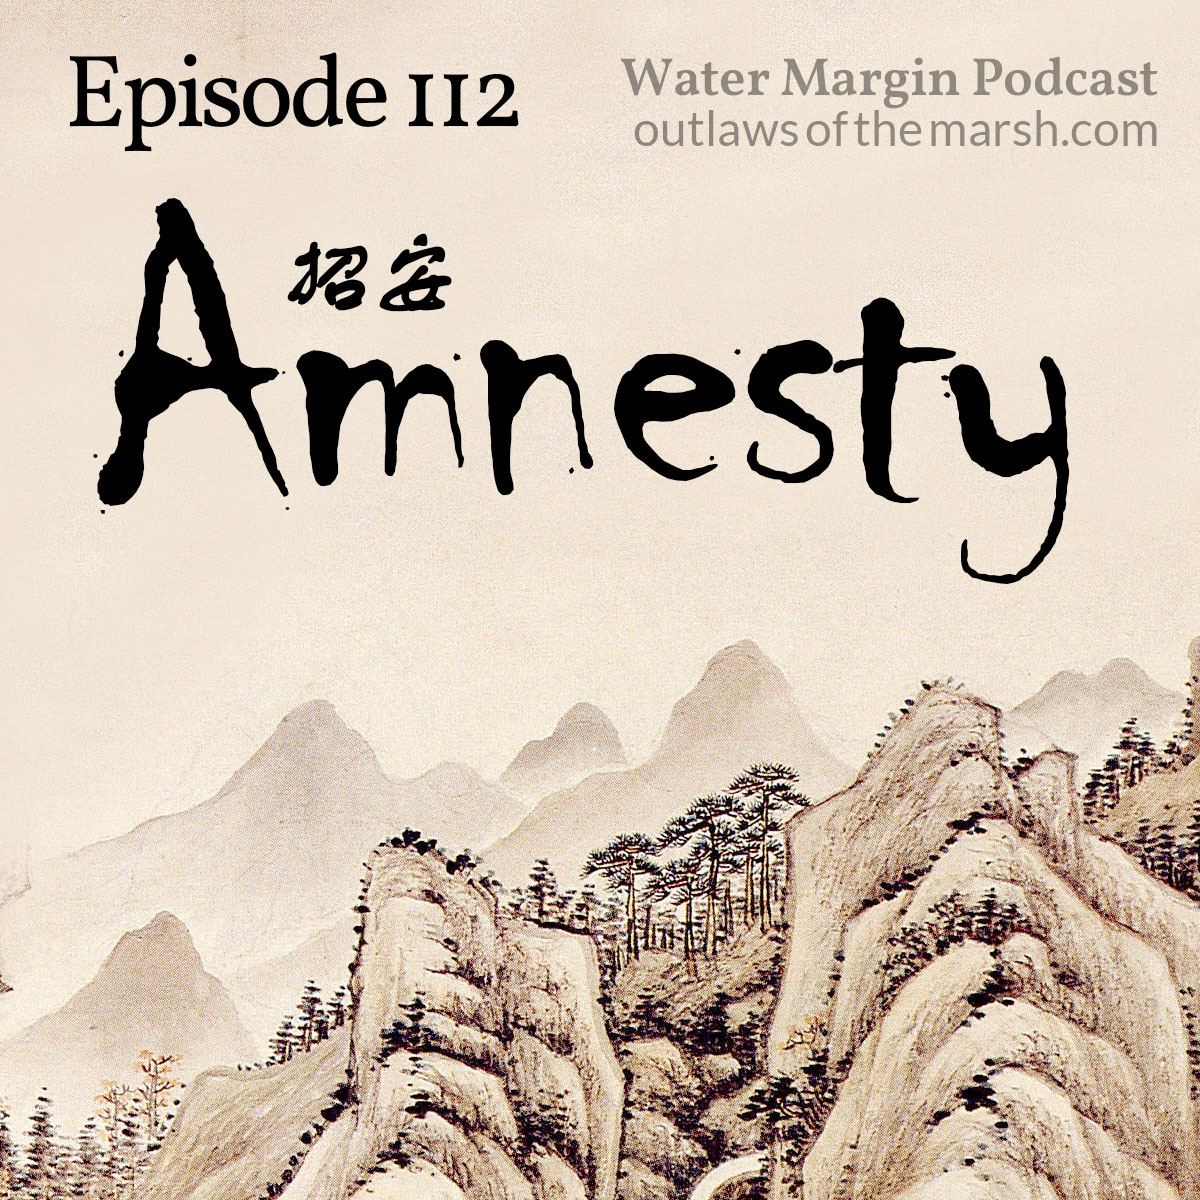 Water Margin Podcast: Episode 112